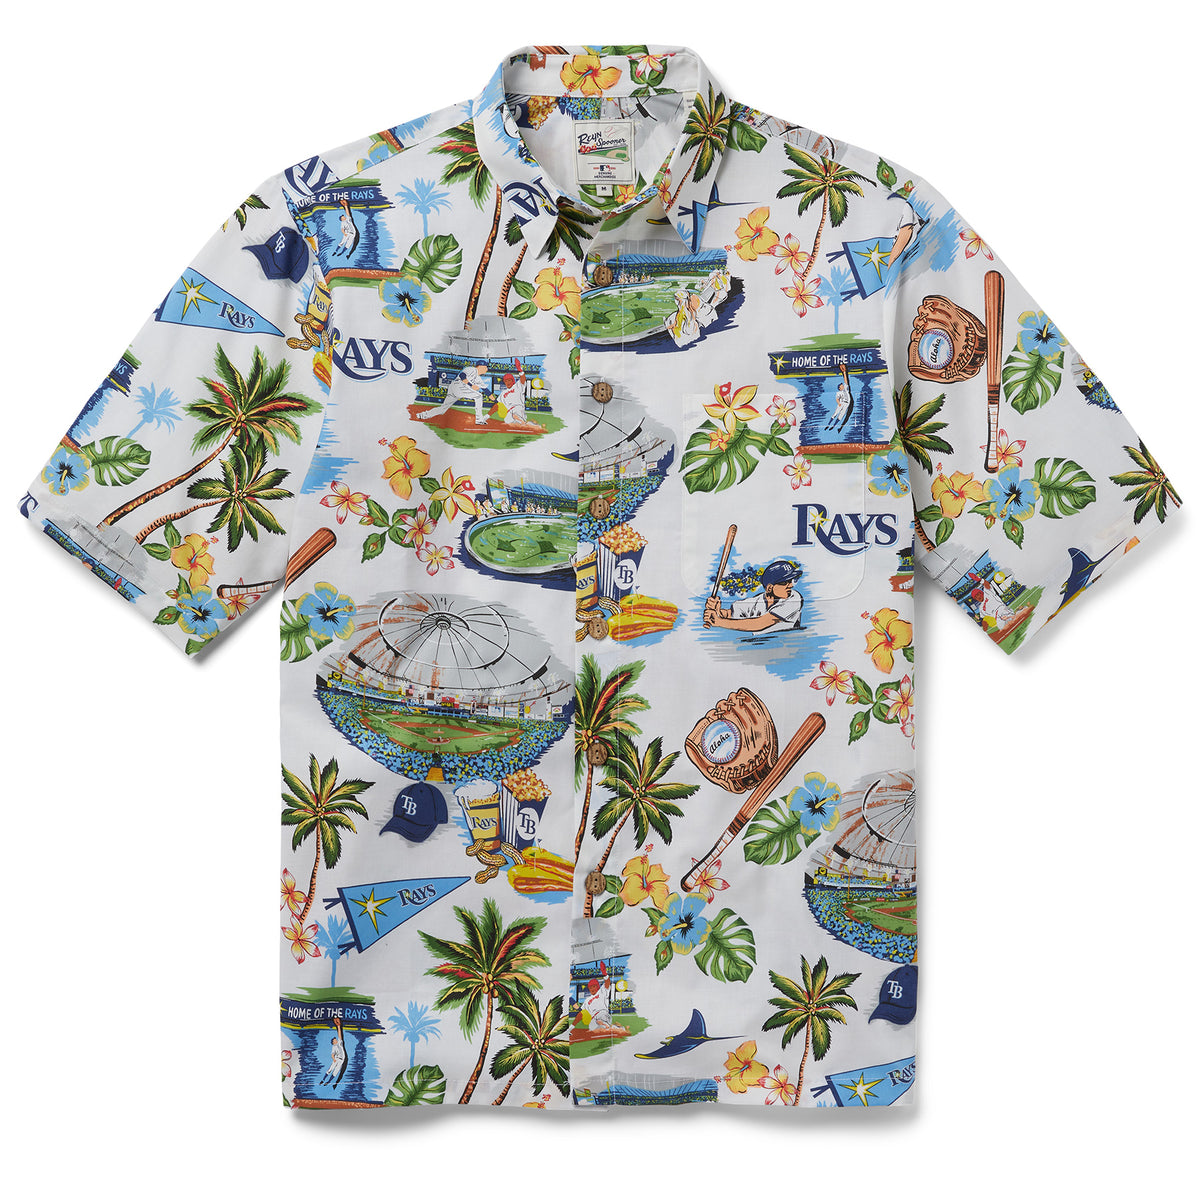 tampa bay rays tropical shirt